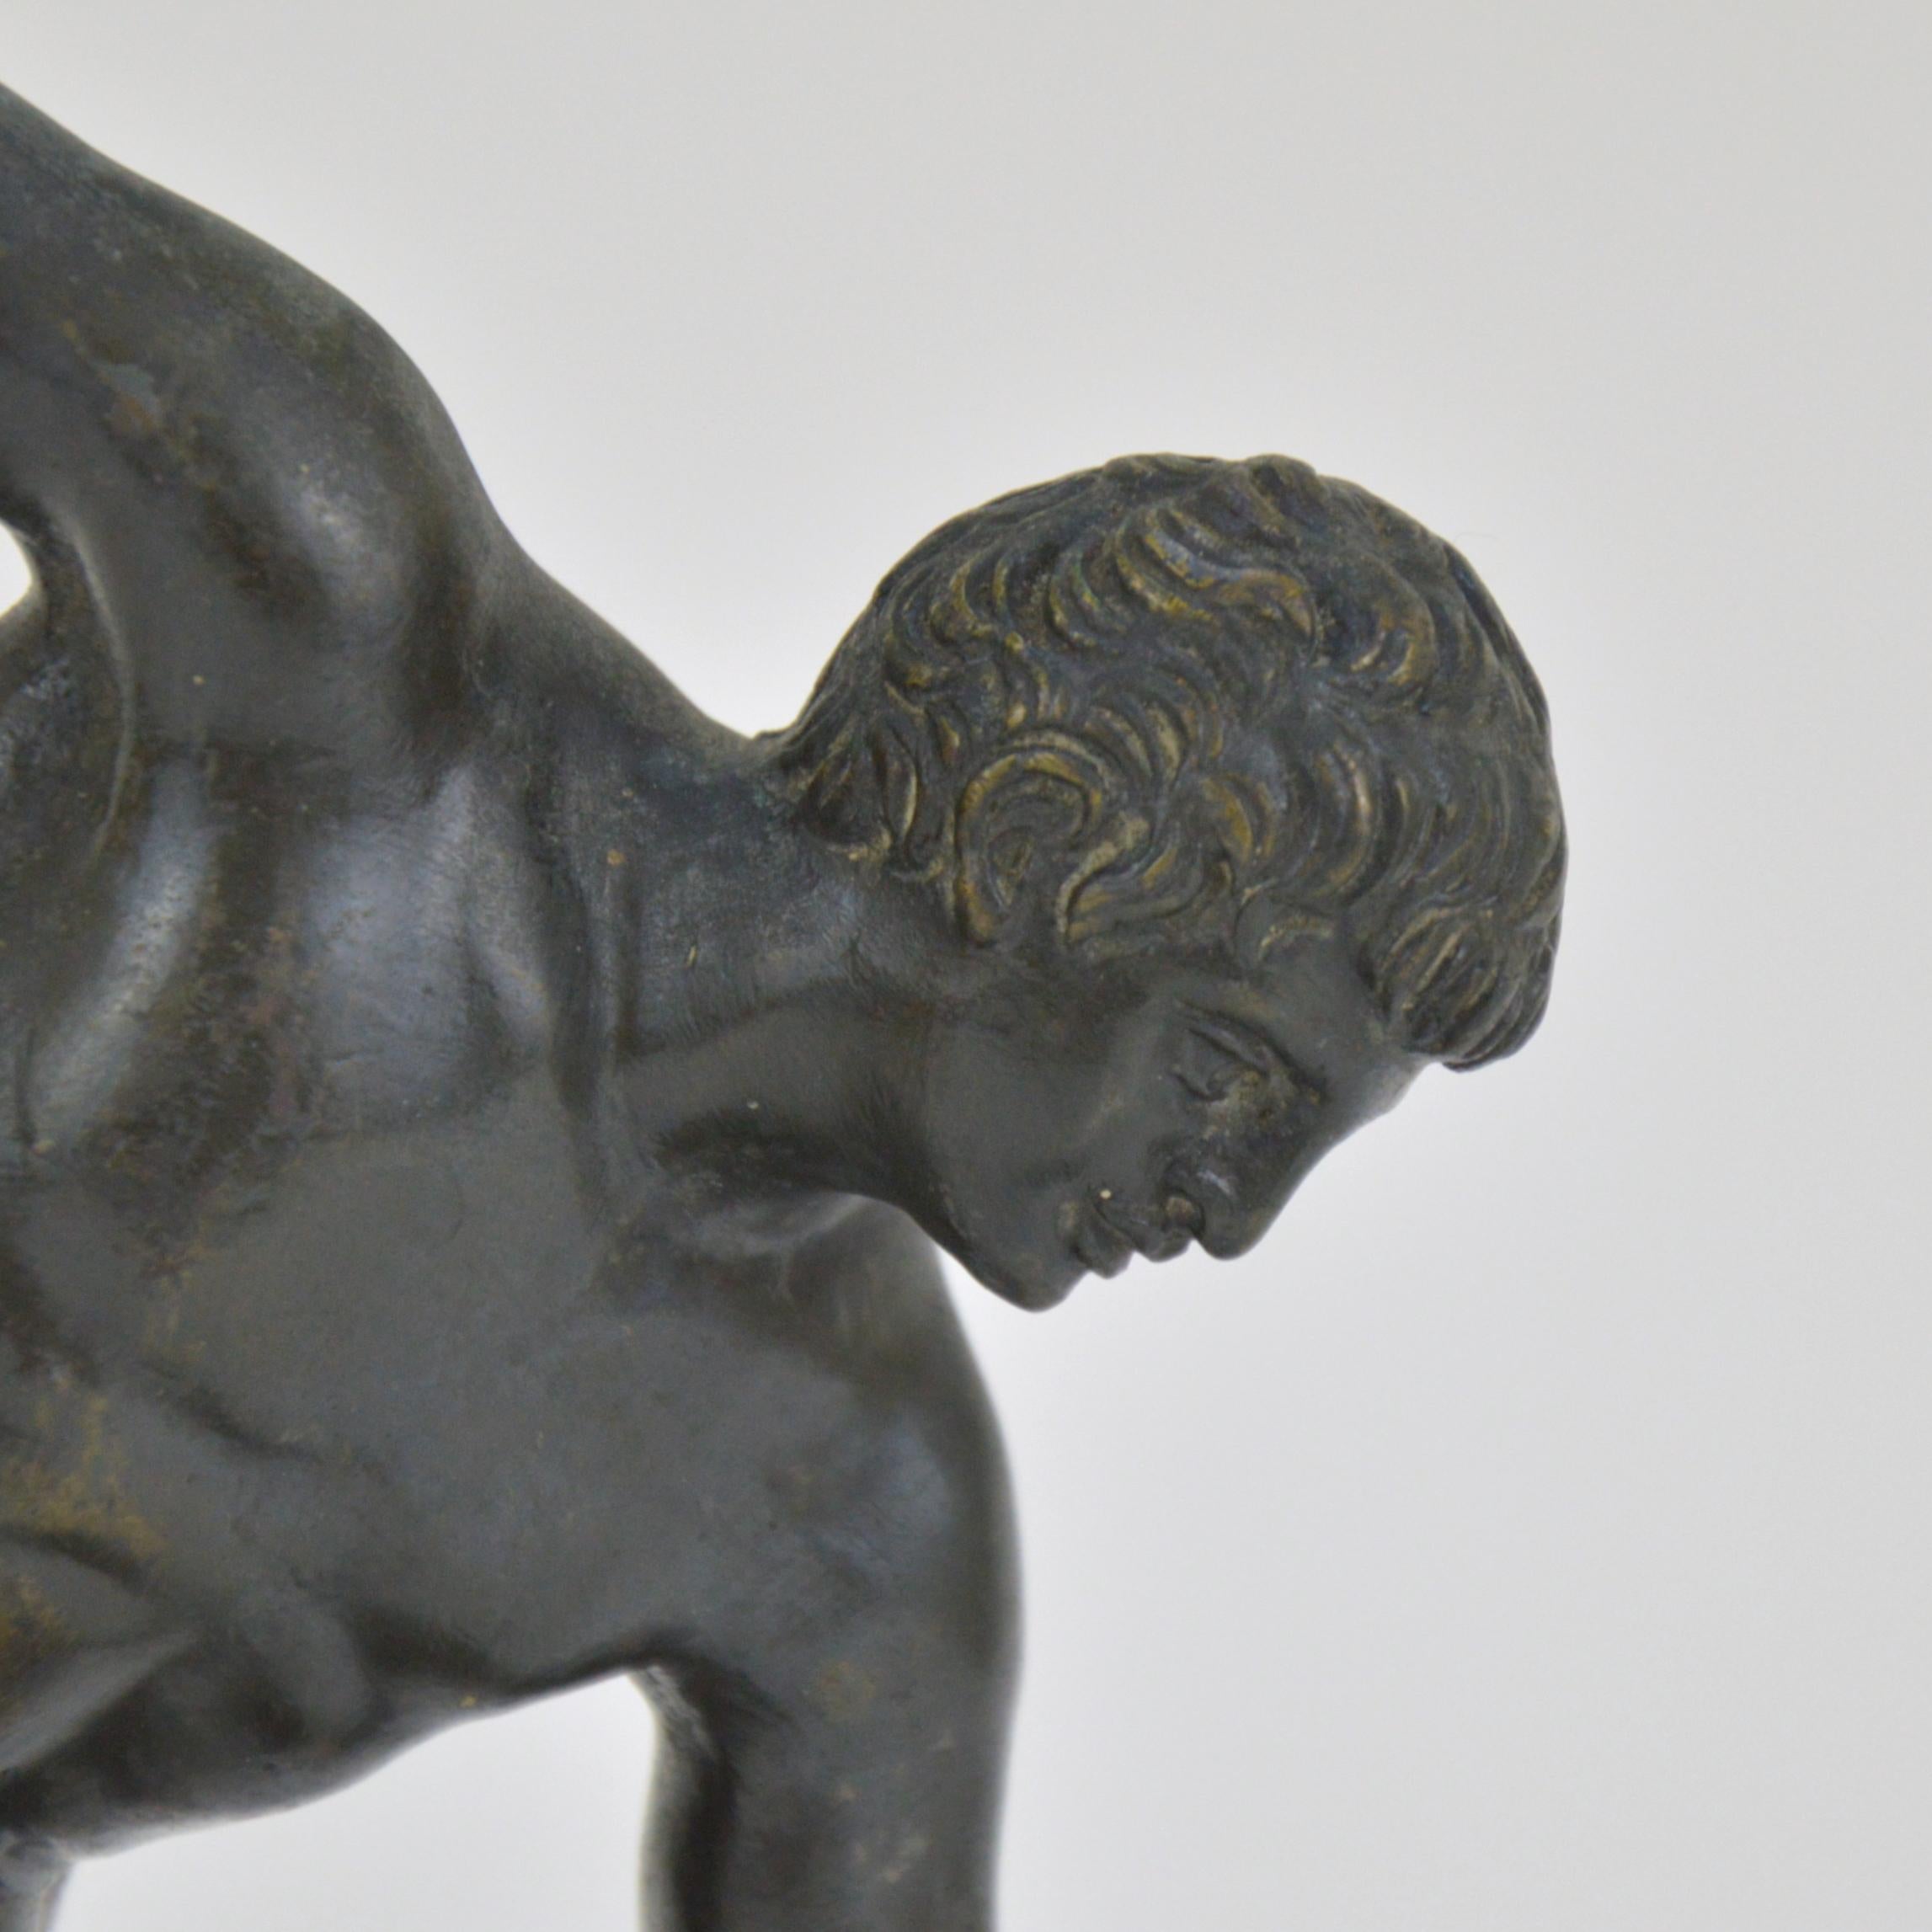 French Antique Patinated Bronze Sculpture Representing Diskobolos